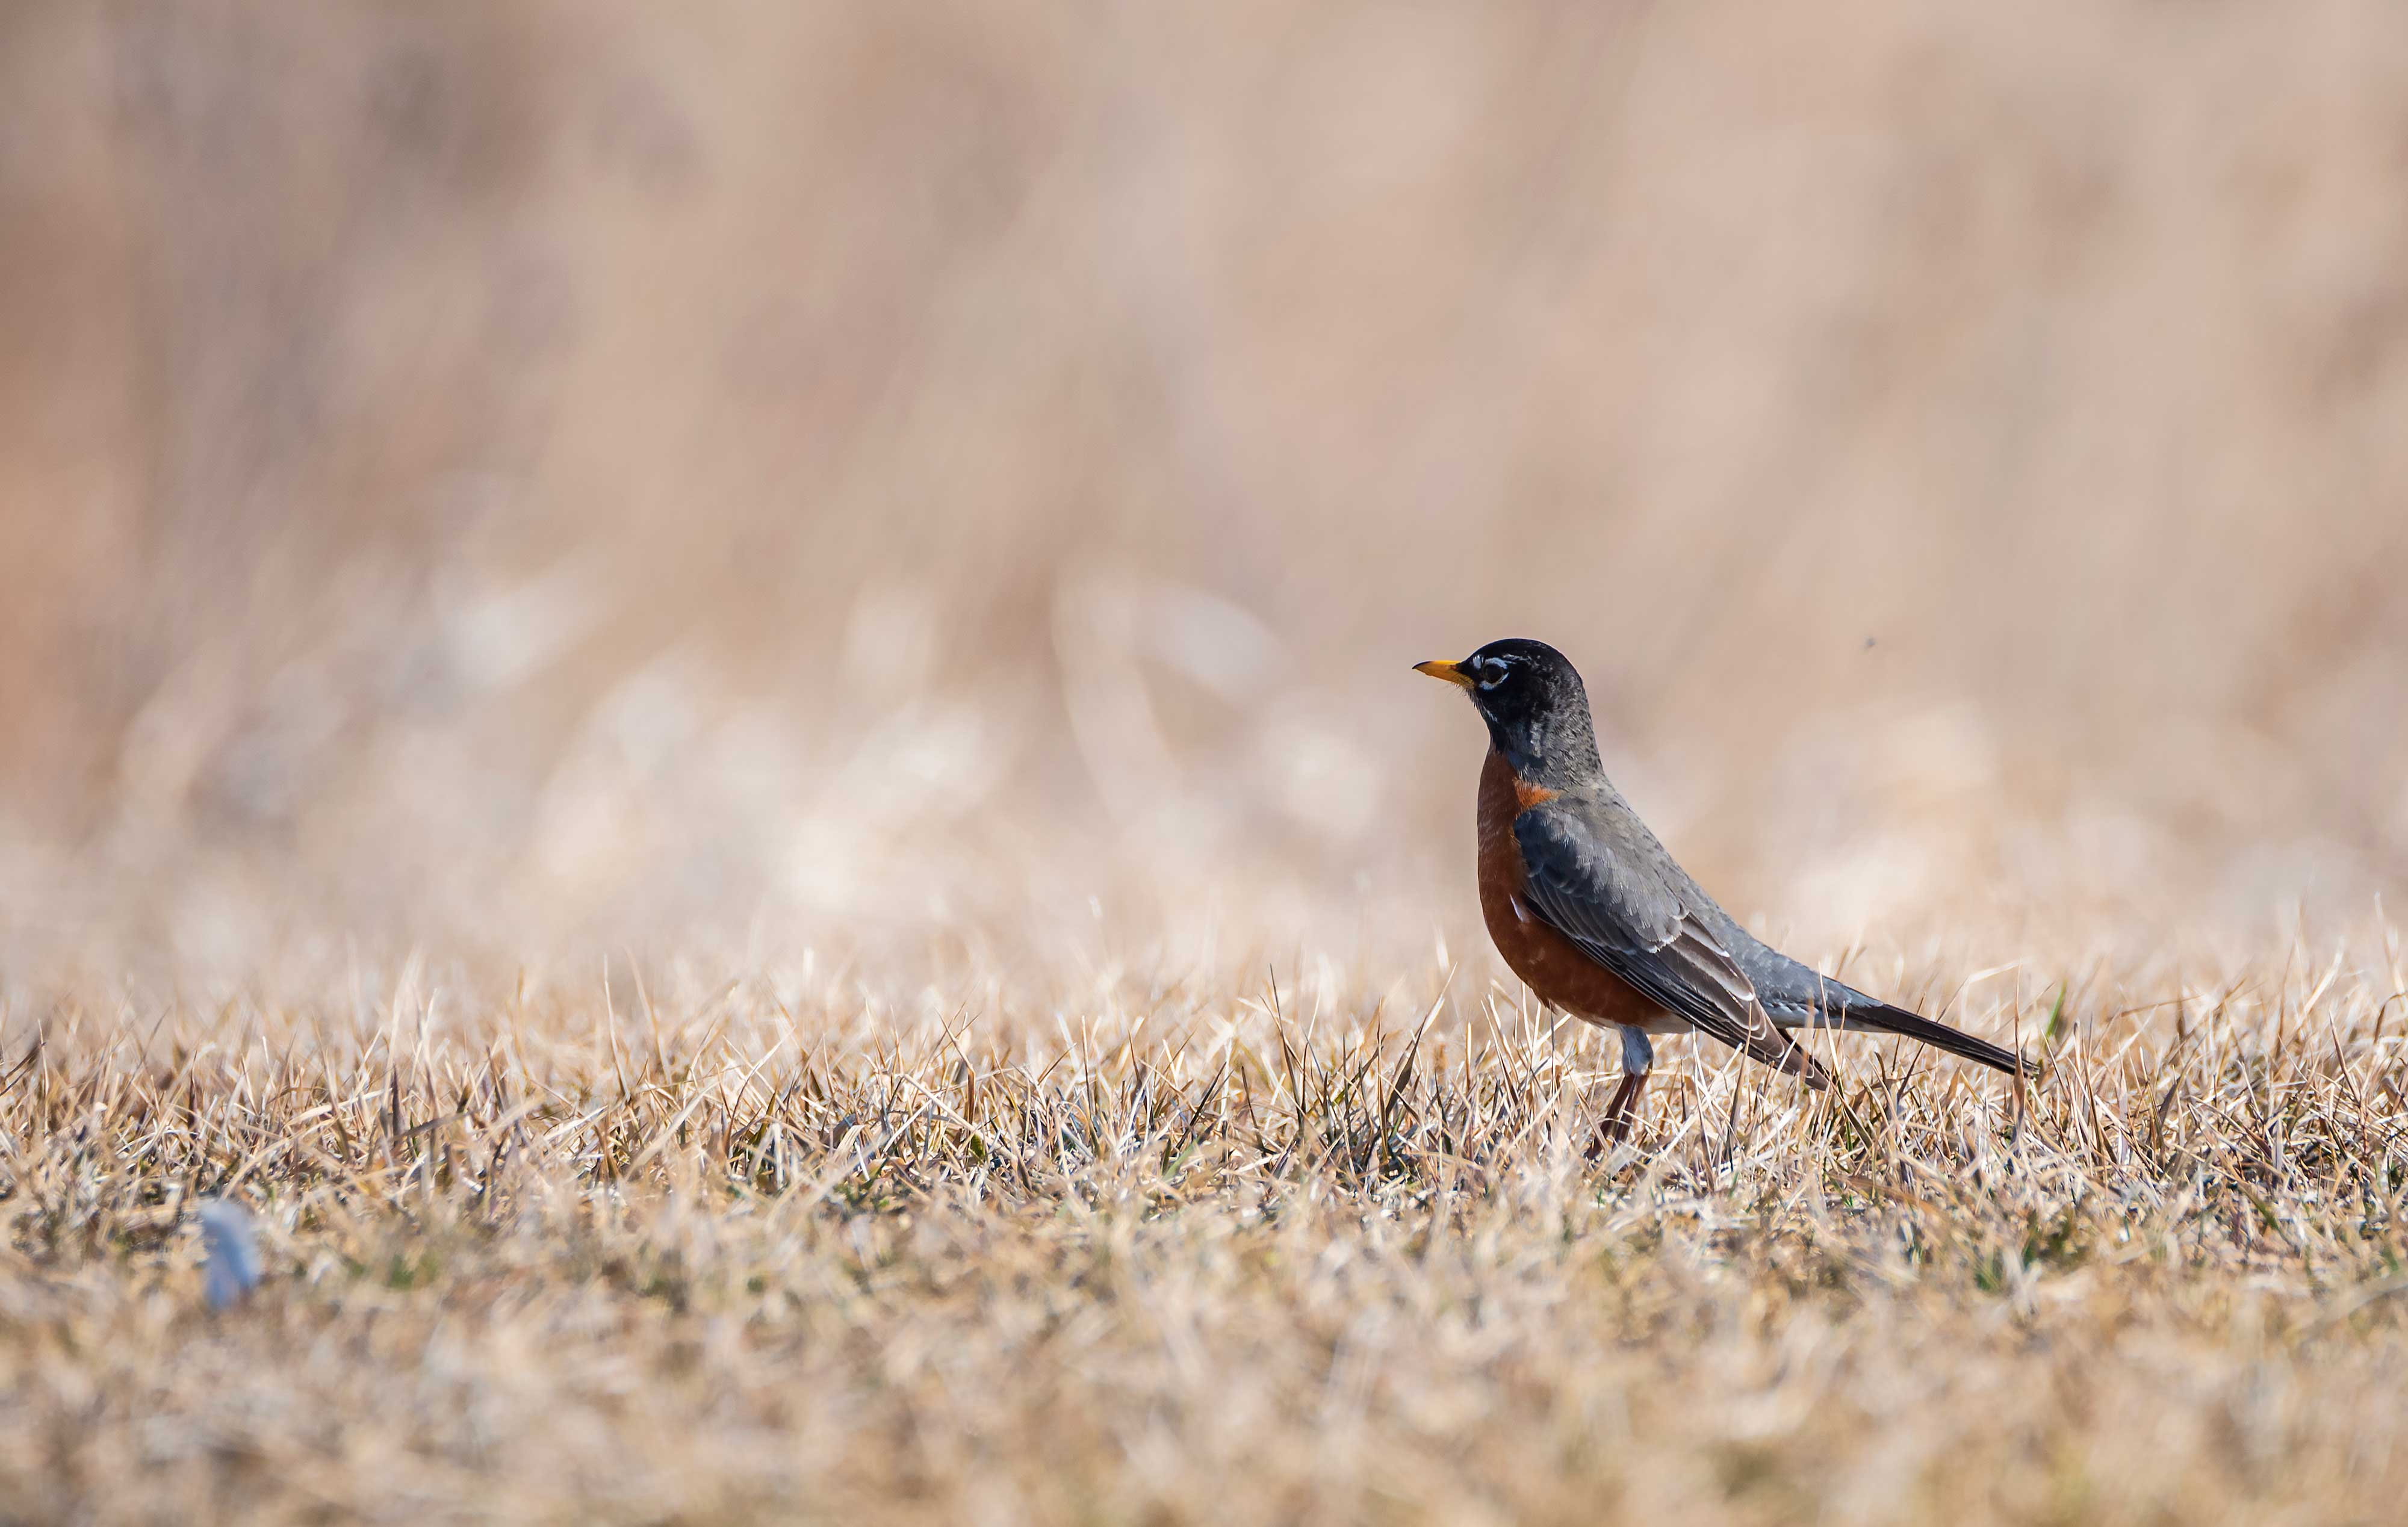 An American robin standing in a field.